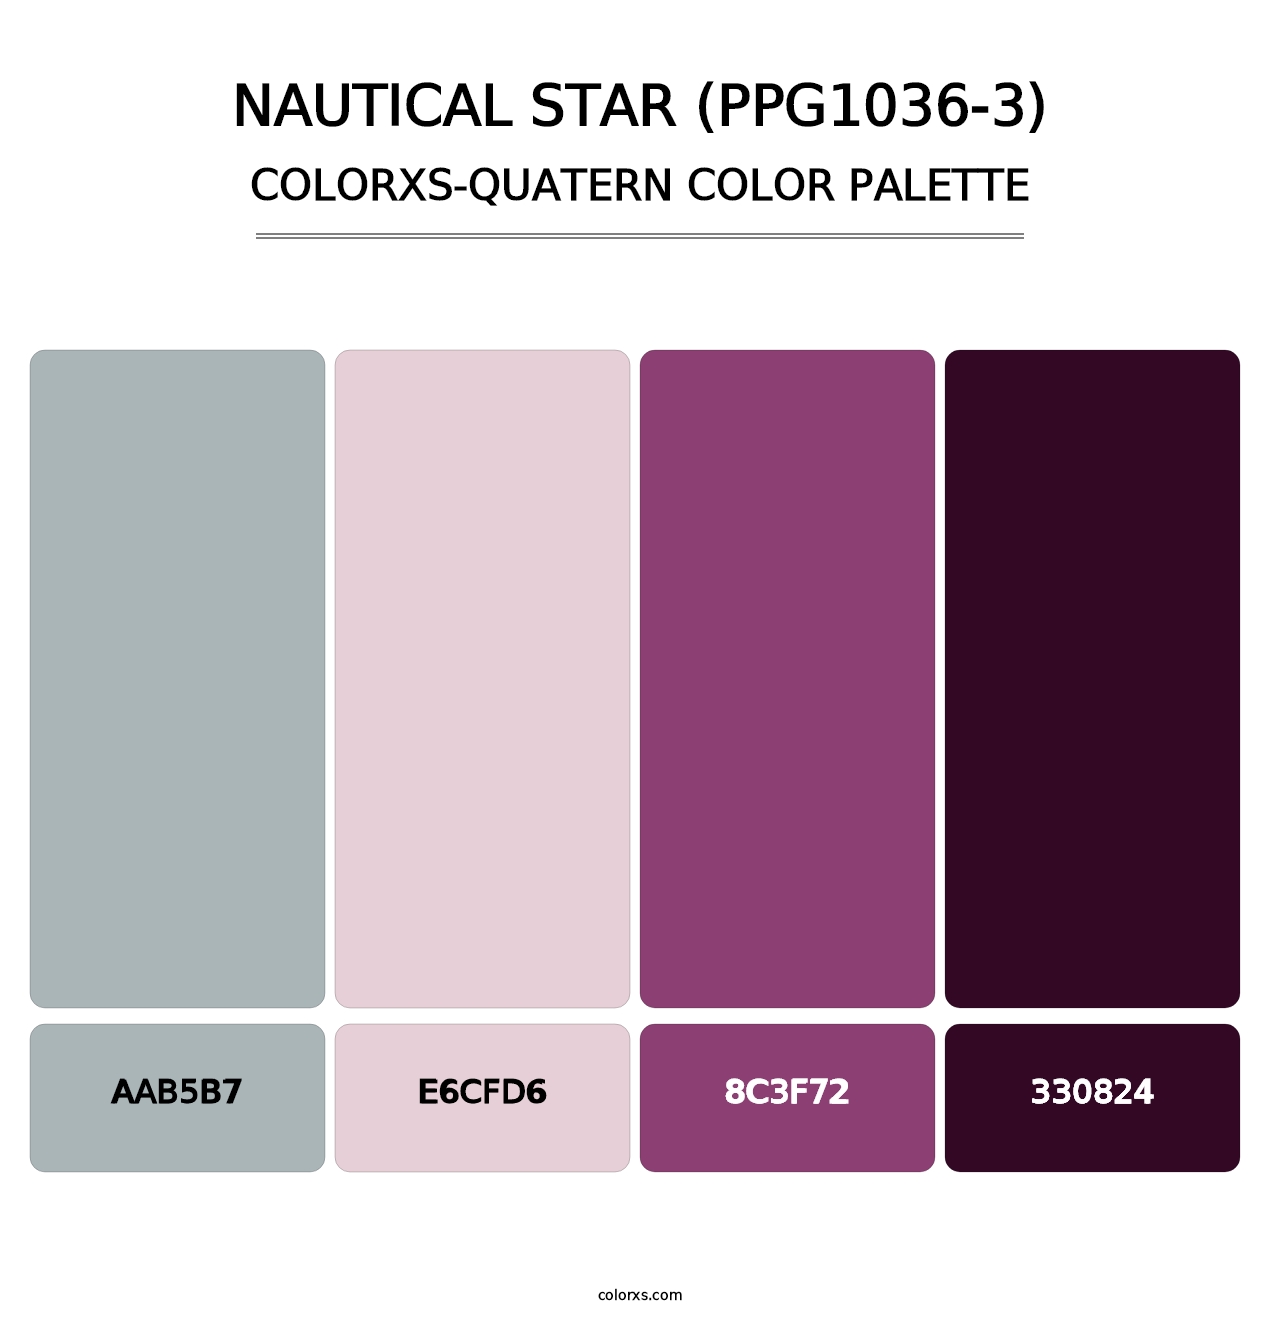 Nautical Star (PPG1036-3) - Colorxs Quatern Palette